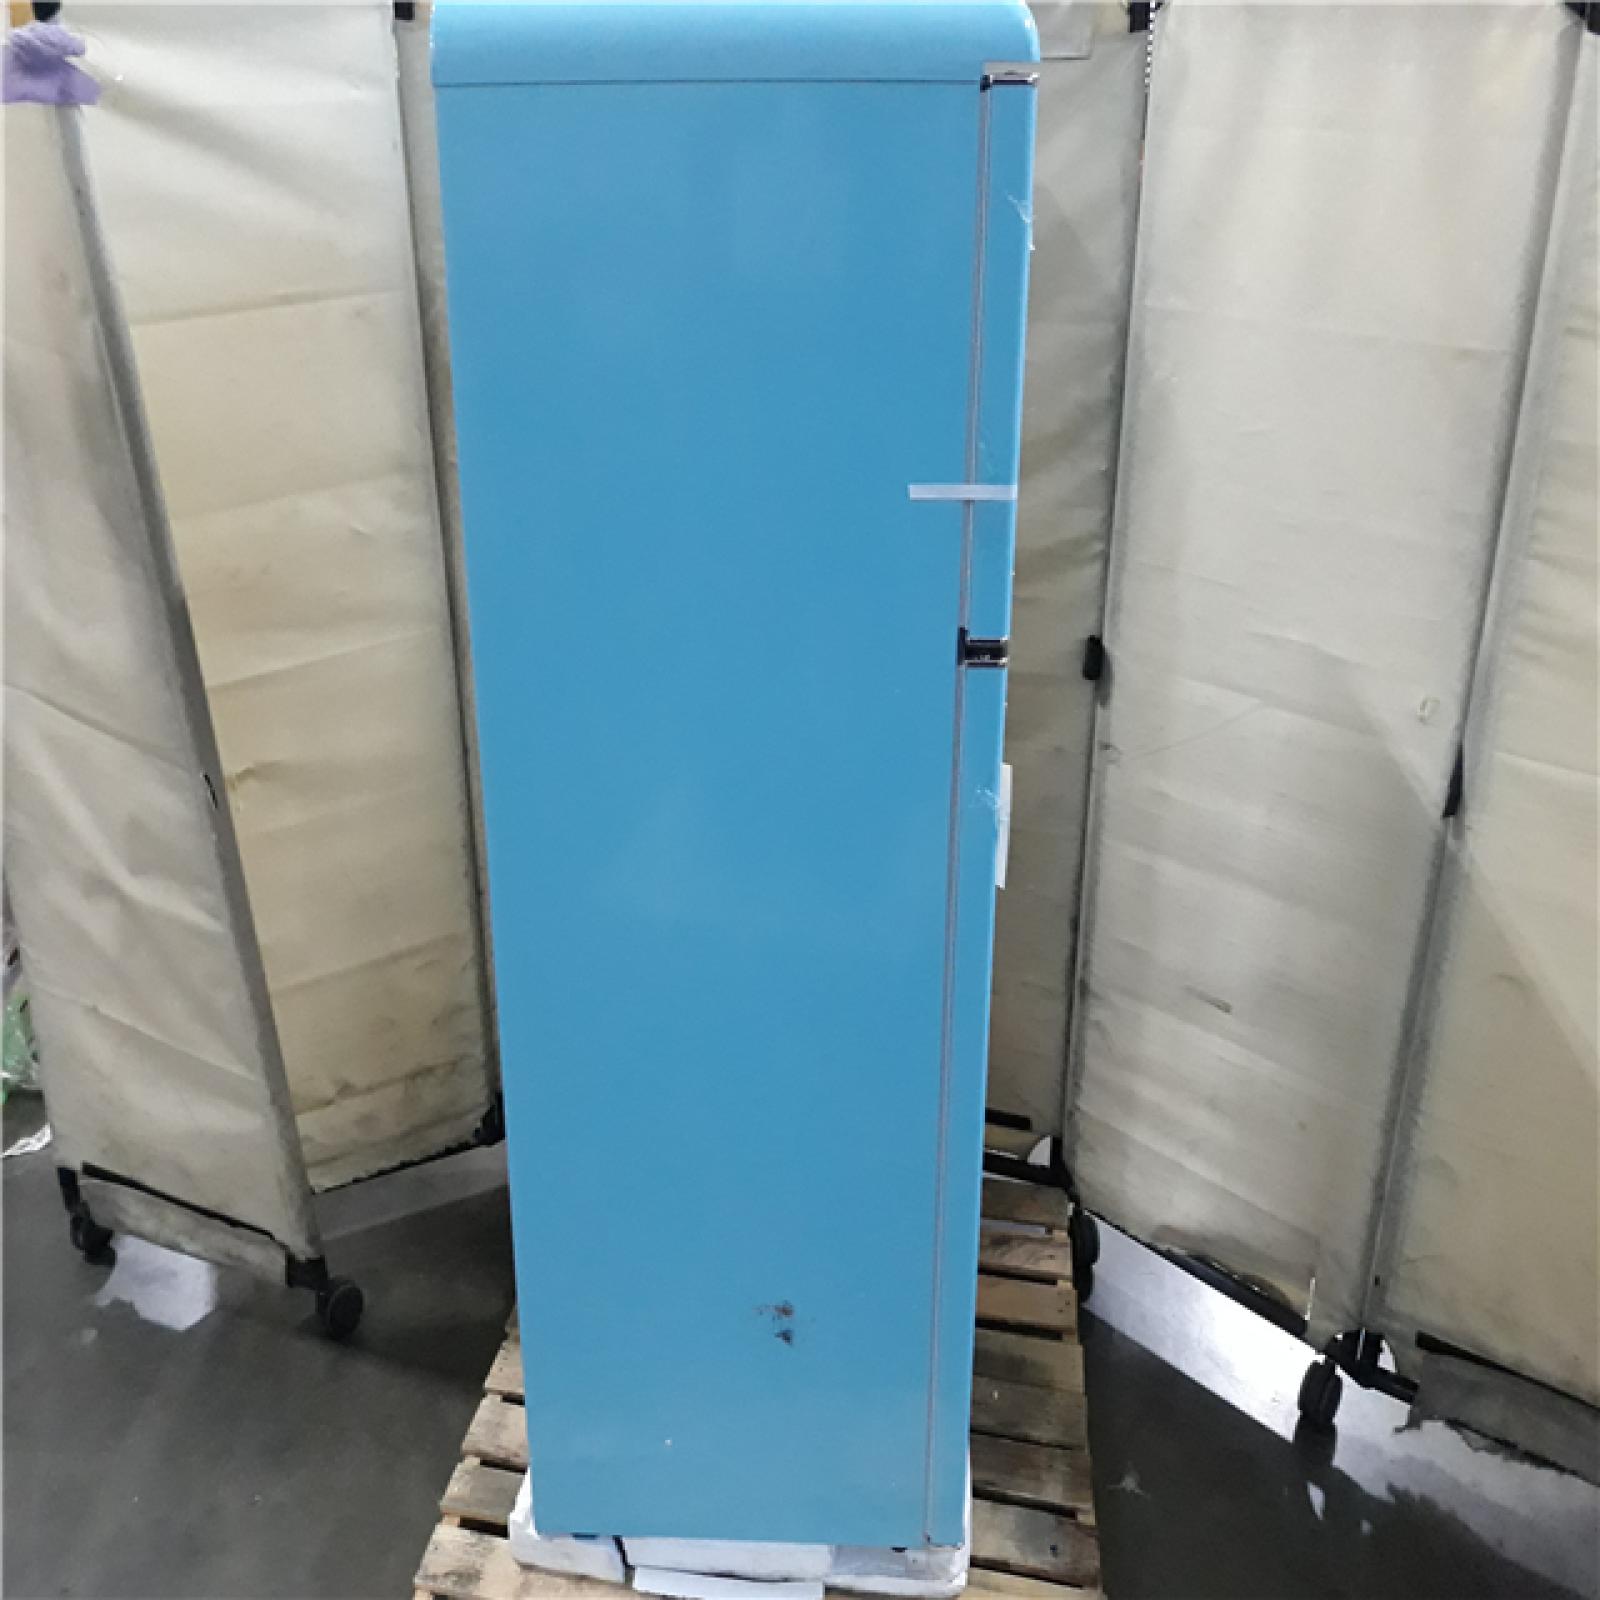 California Like-New Galanz Top Freezer Refrigerator